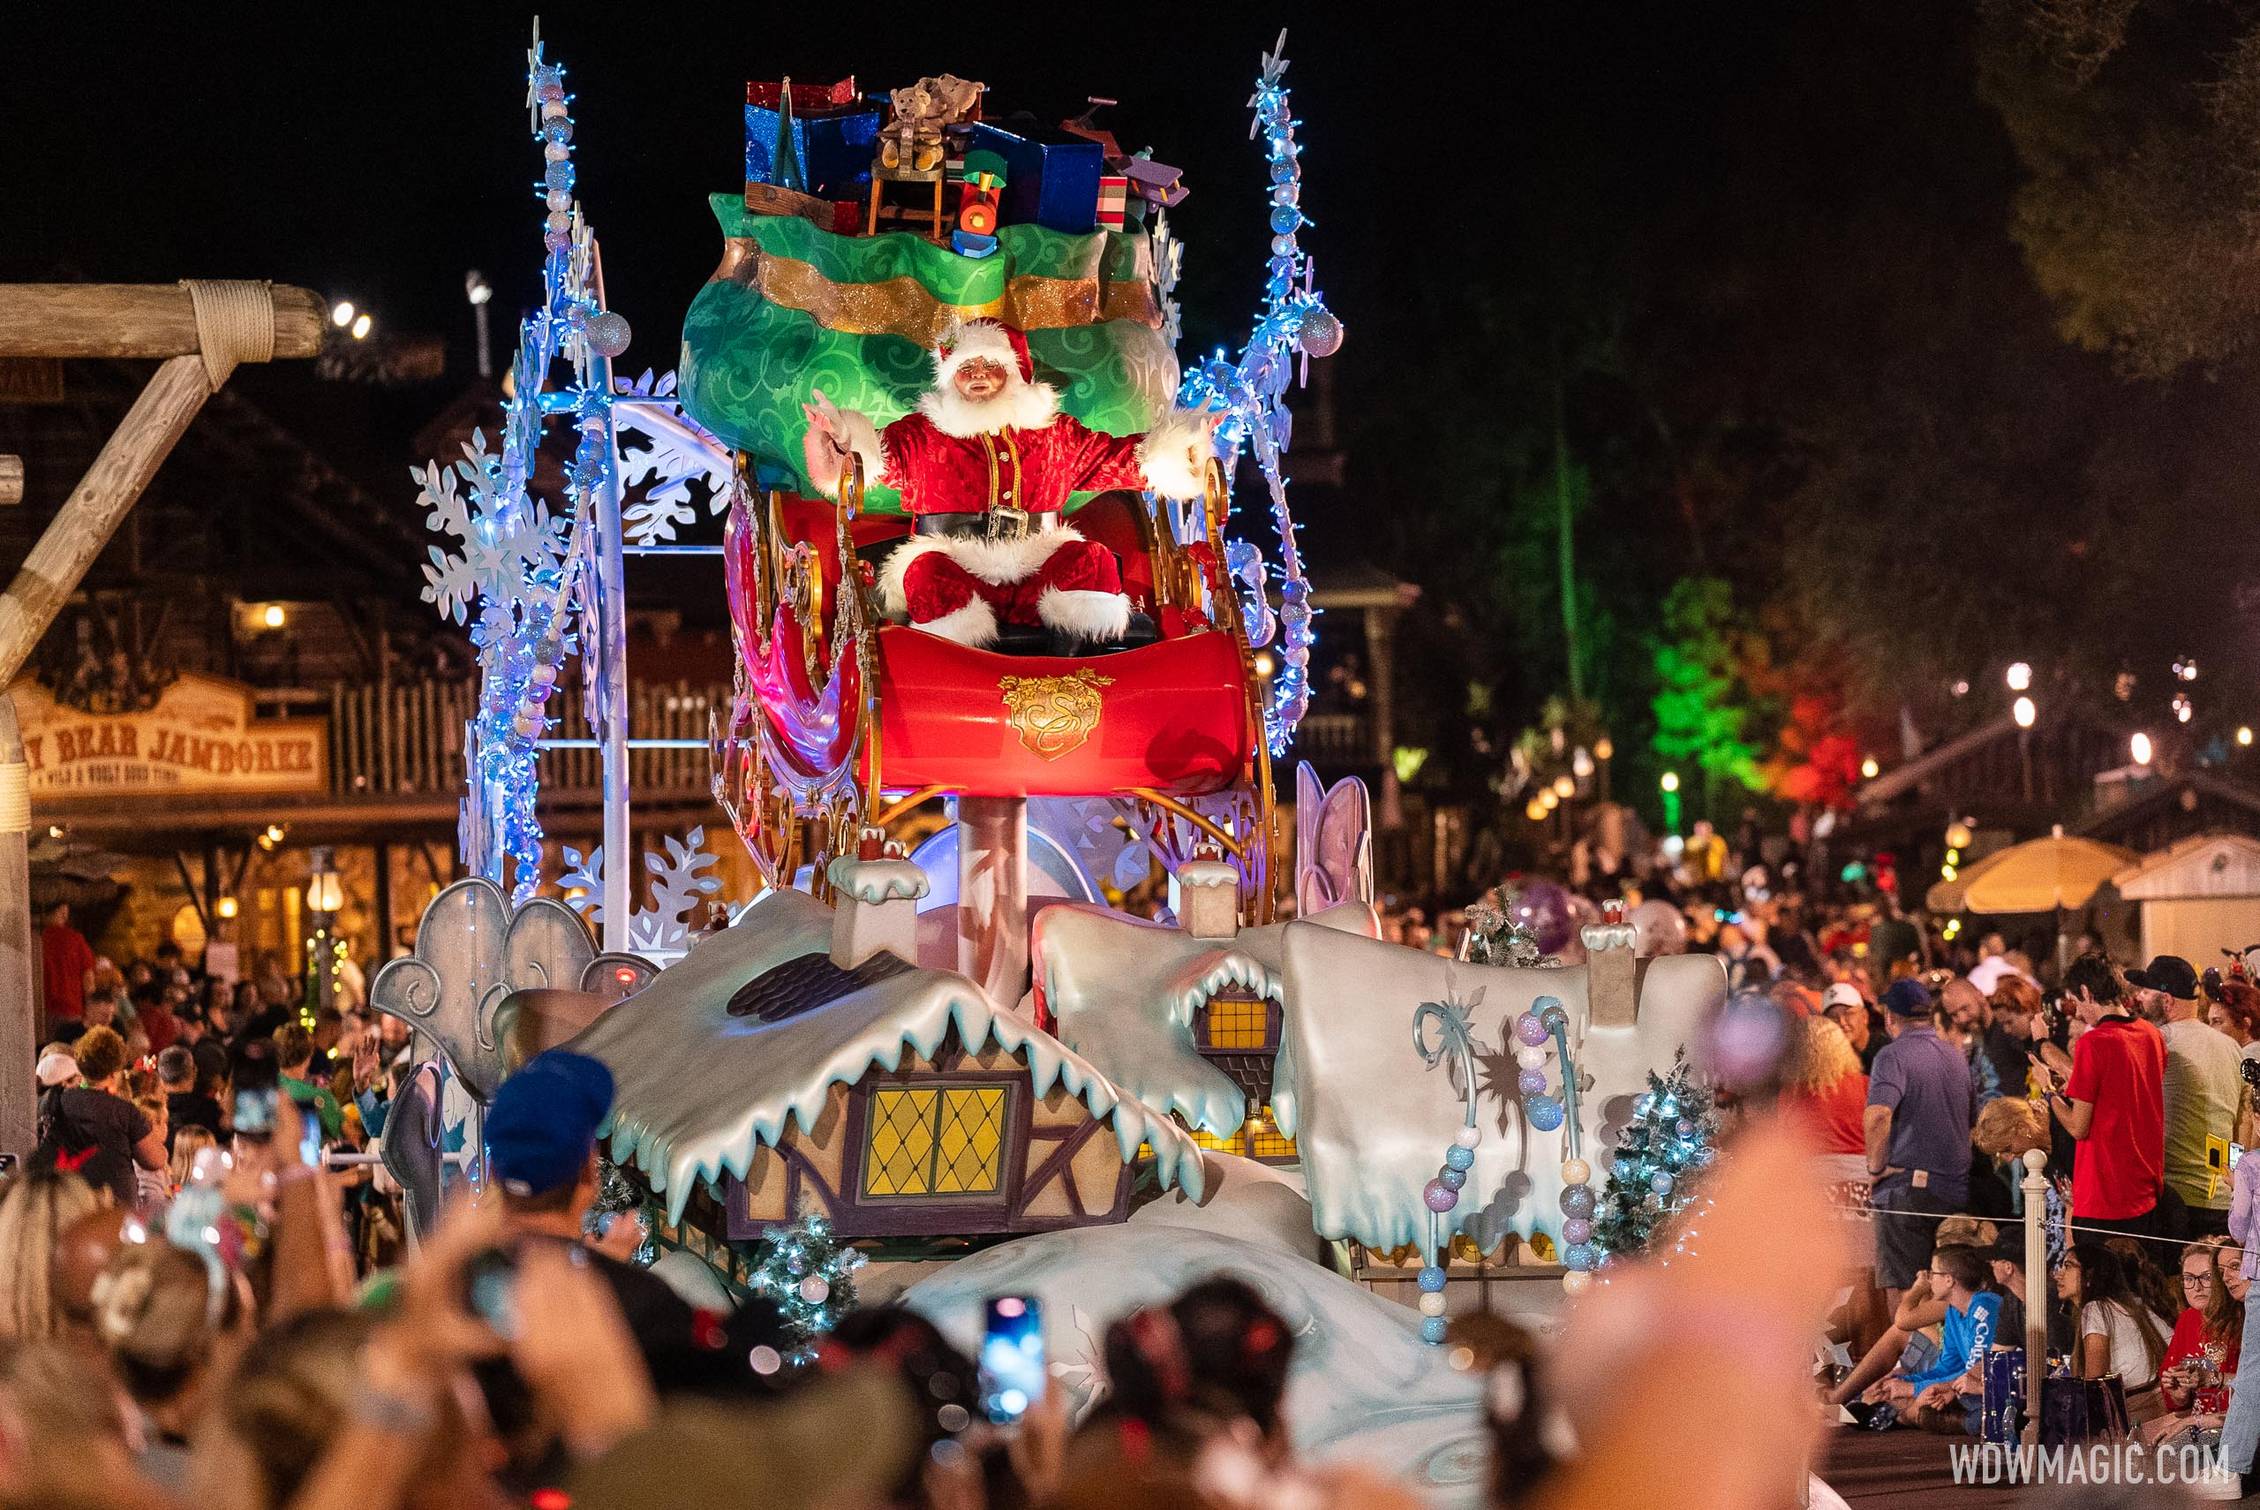 Mickeys-Once-Upon-a-Christmastime-Parade_Full_49571.jpg